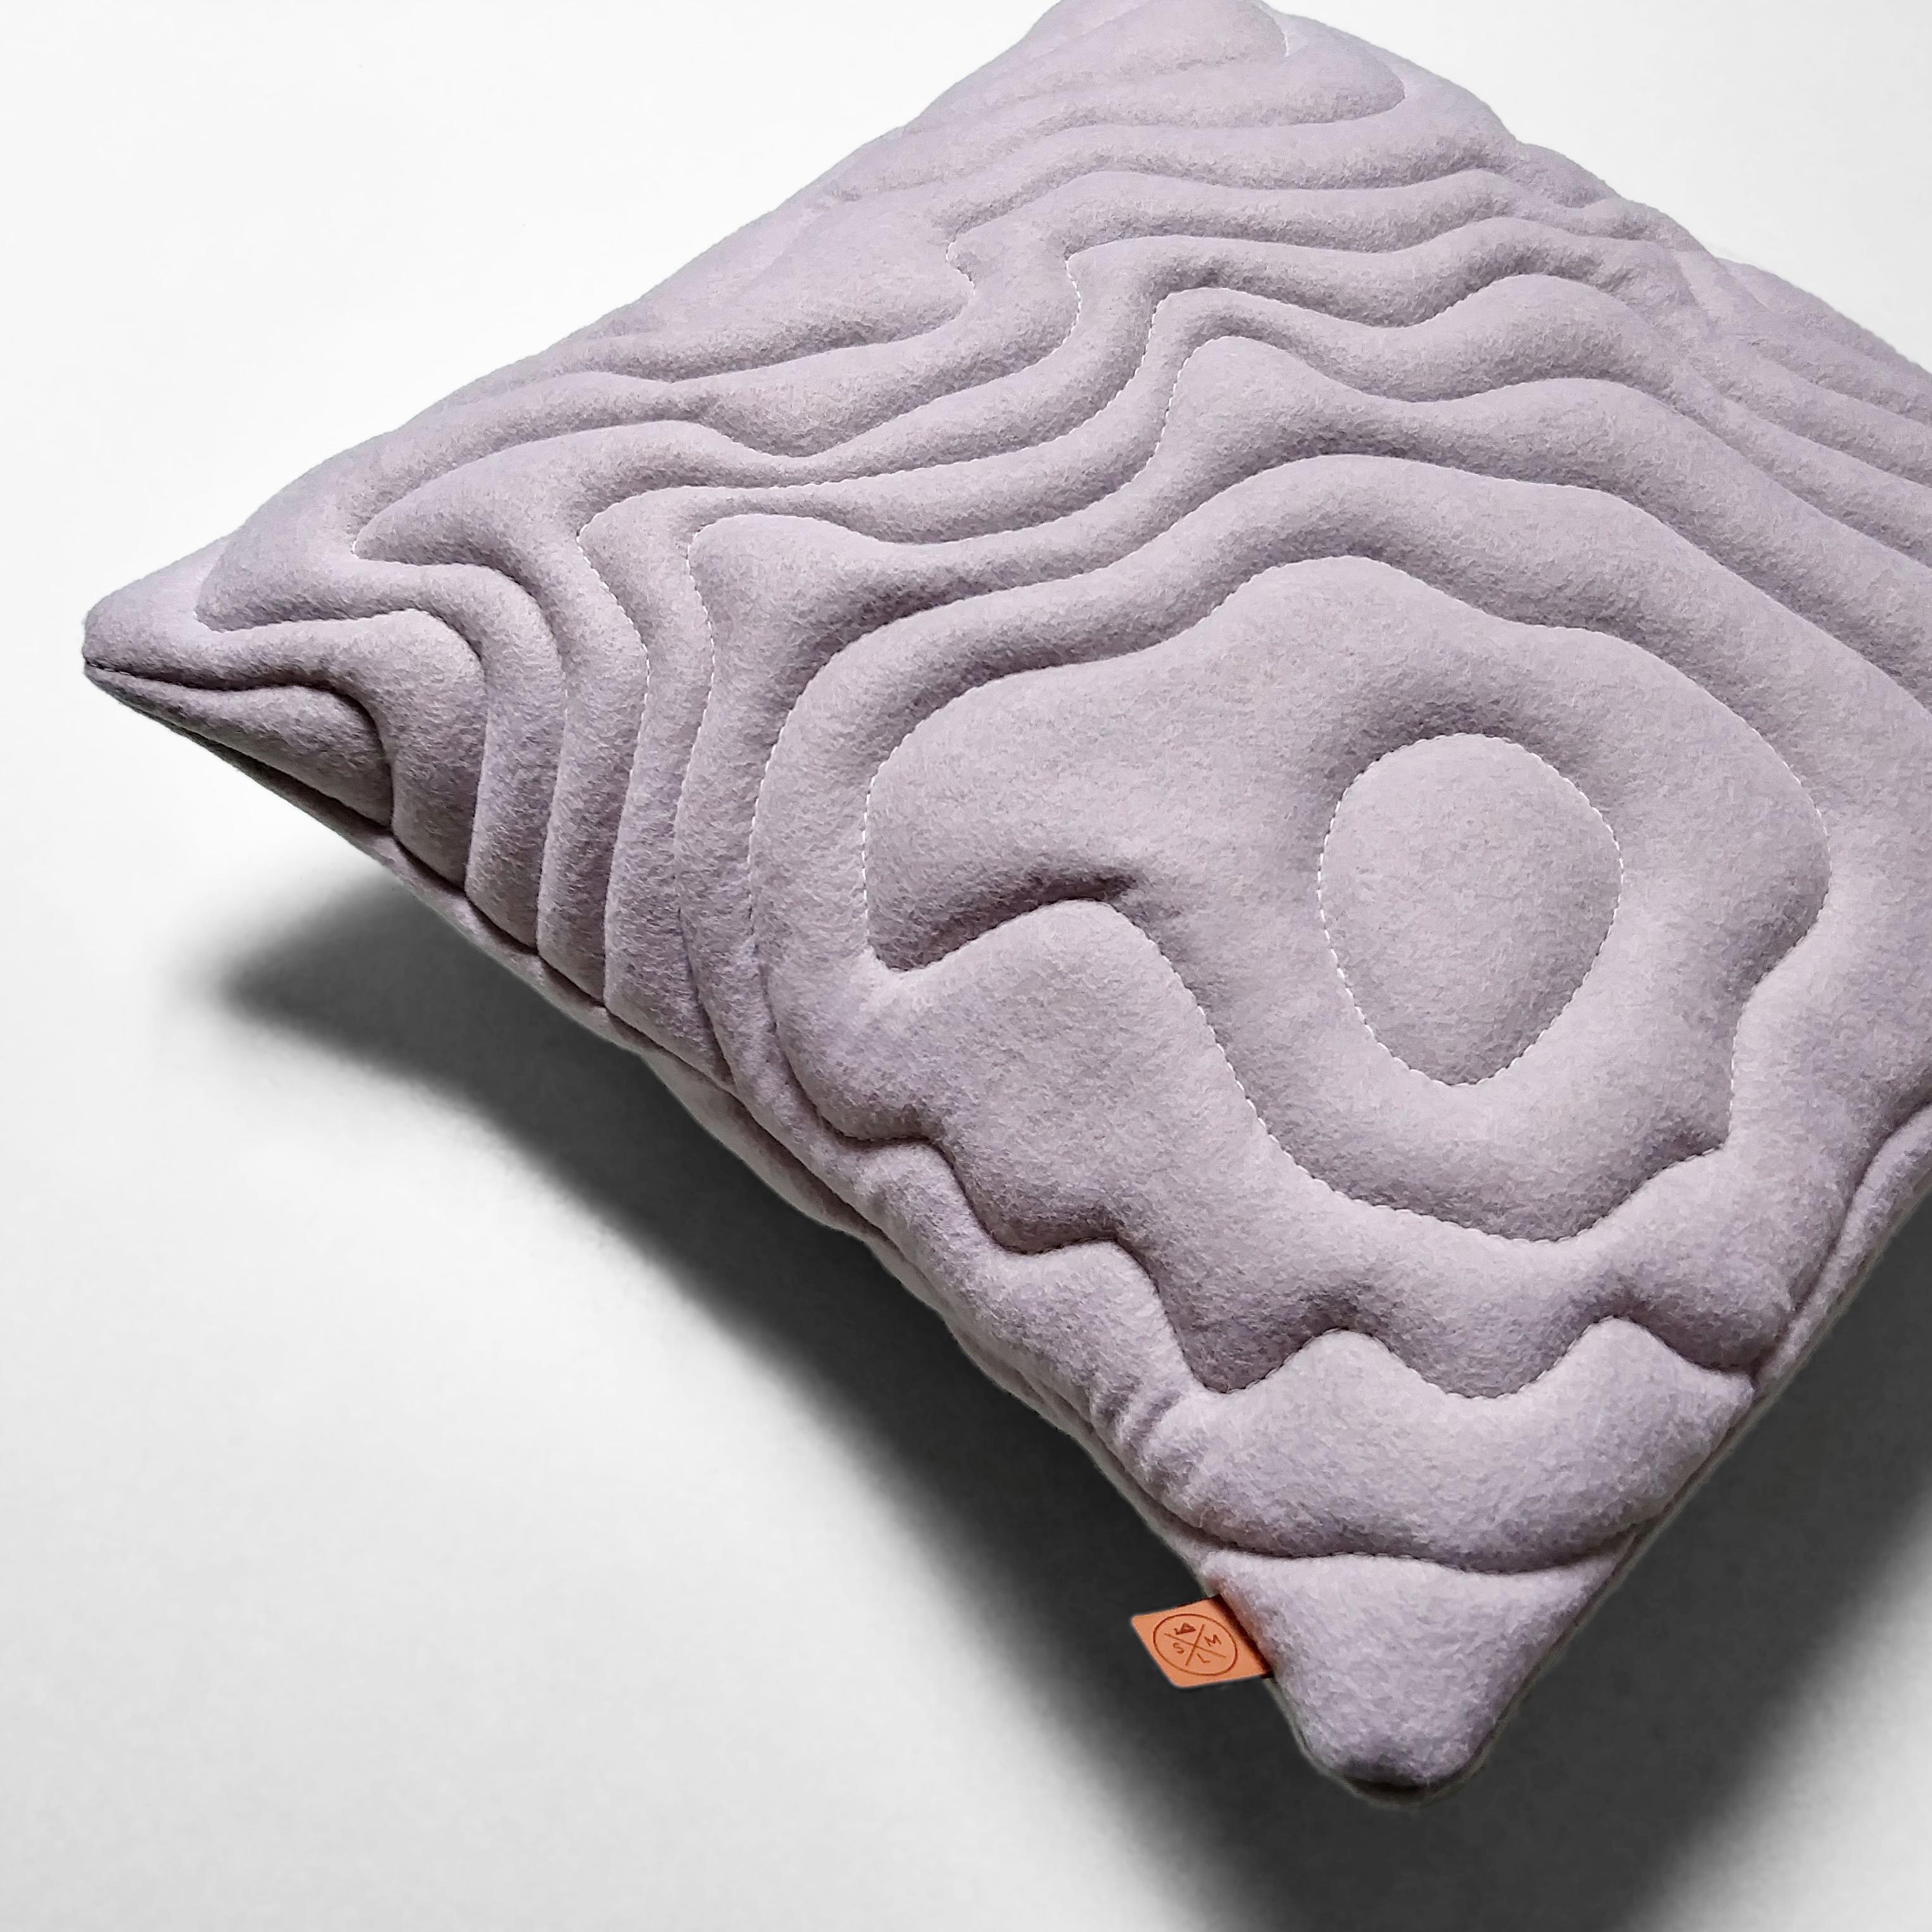 Mount Rainier Topography Pillow - Heather Grey Wool Housewares Designed by Sara Smiley 